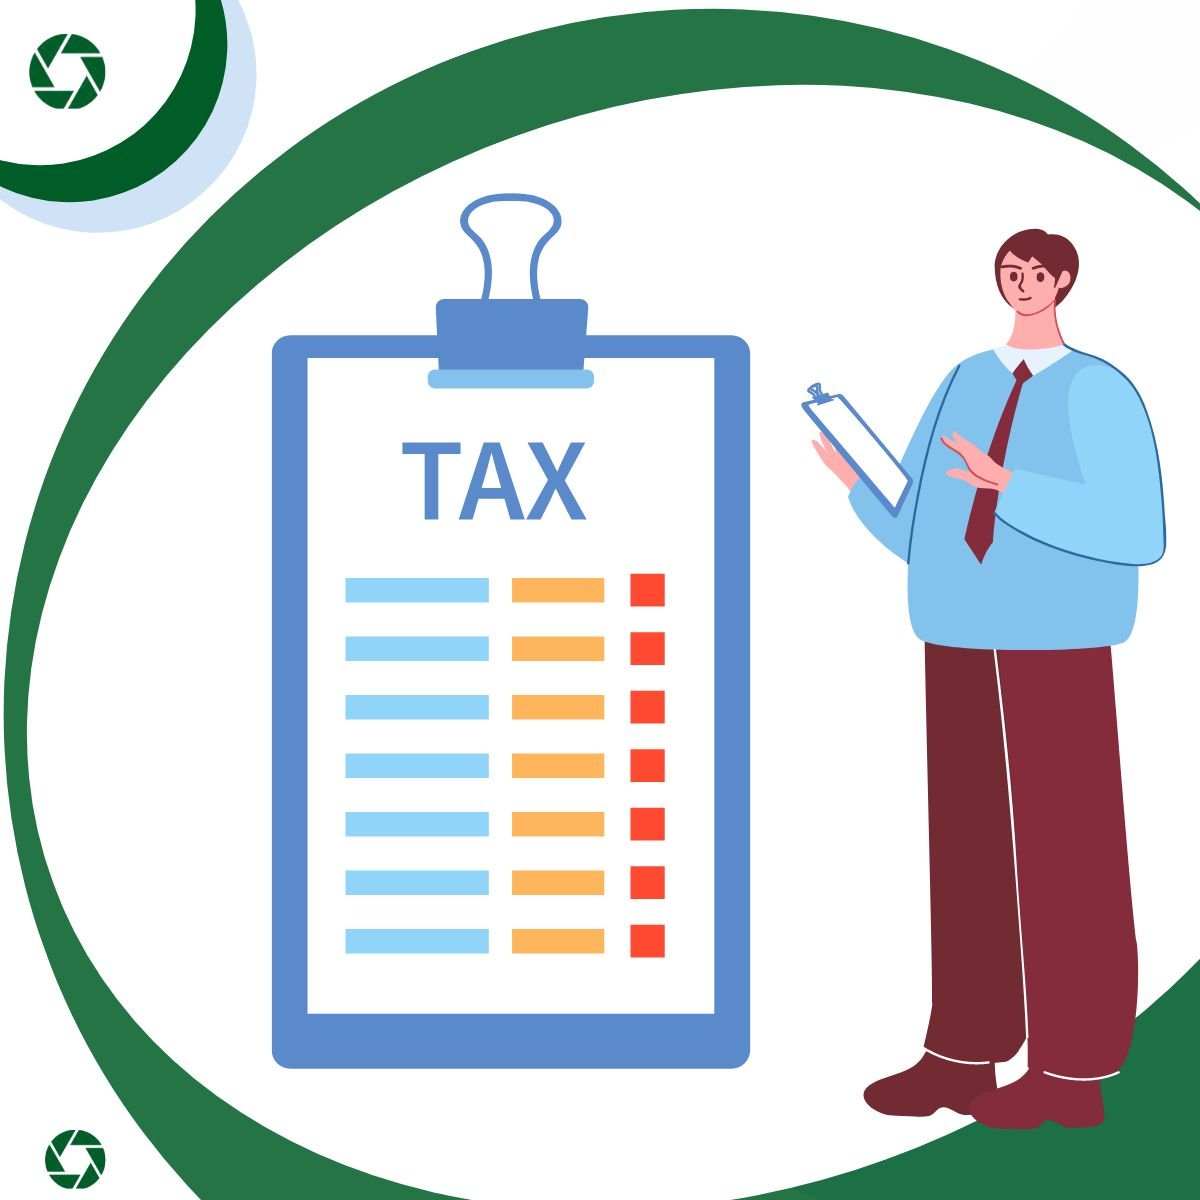 Vat tax consultancy services